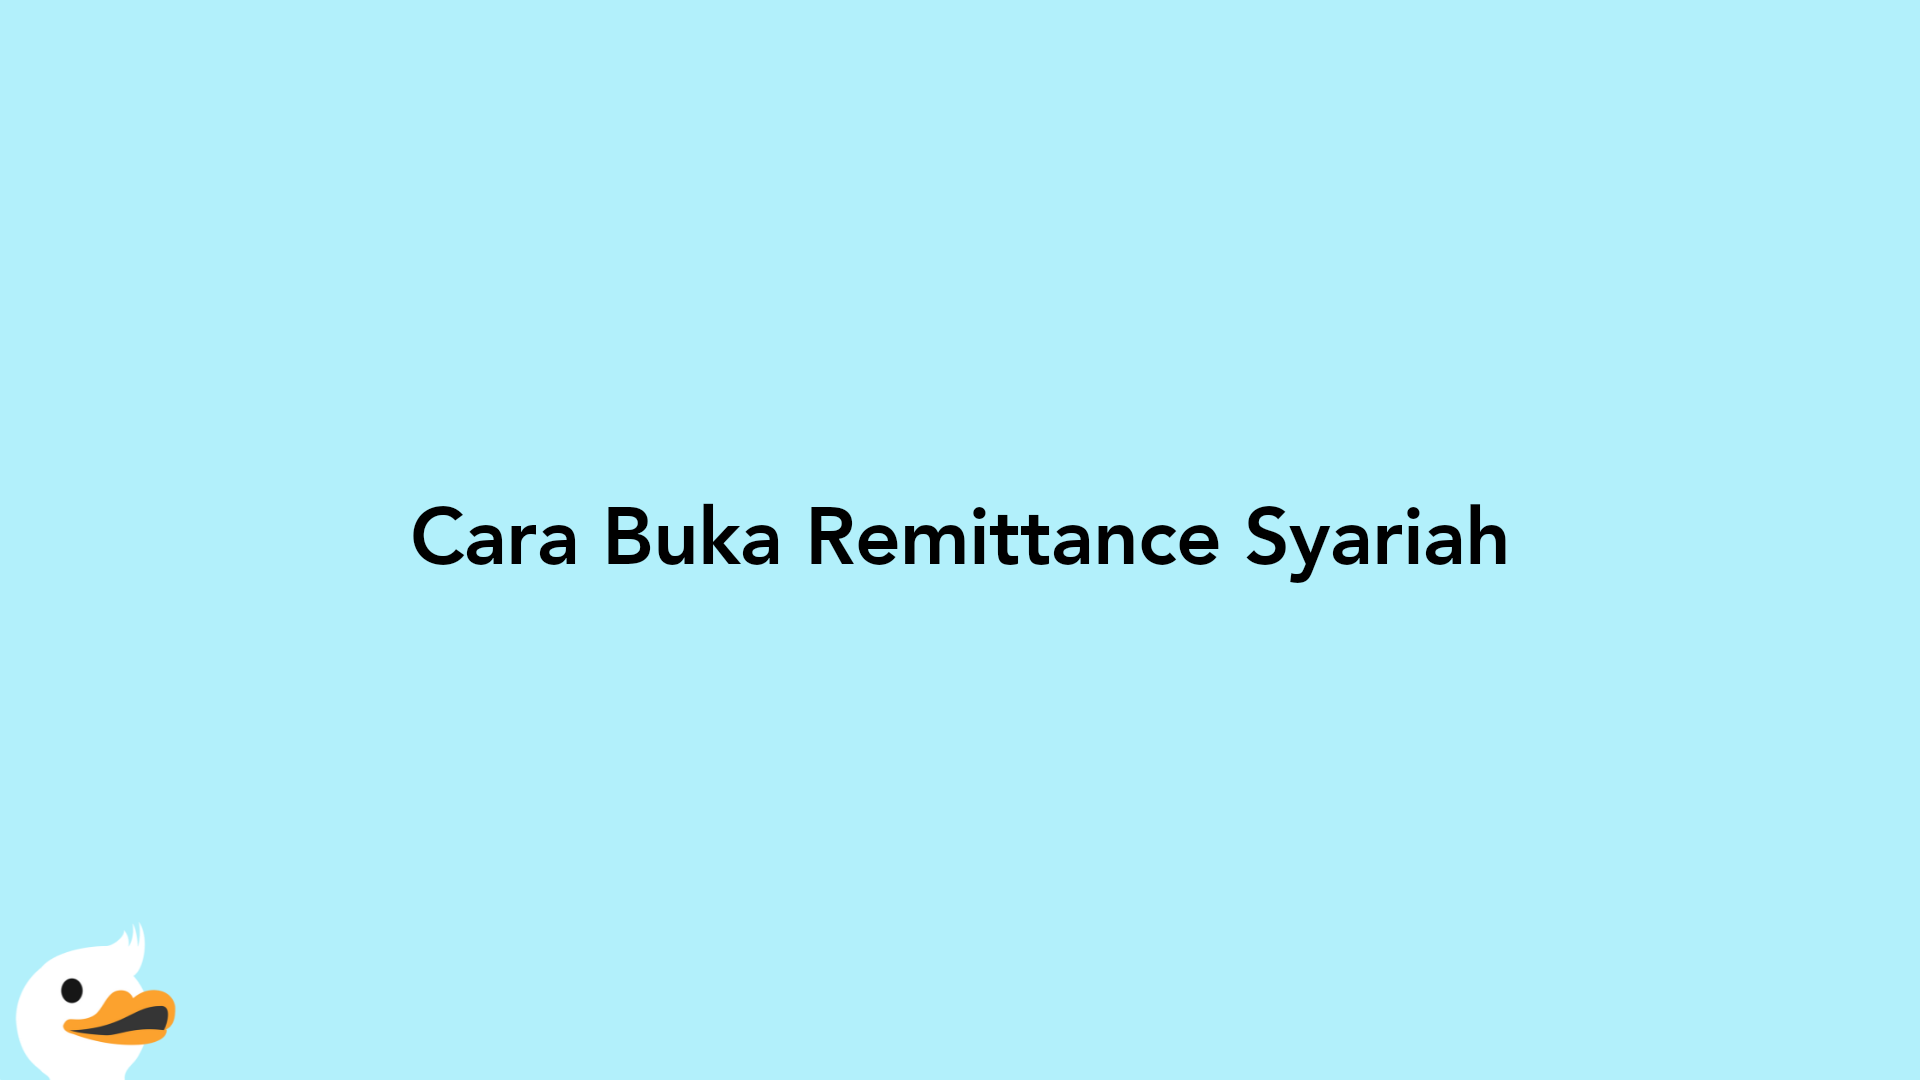 Cara Buka Remittance Syariah